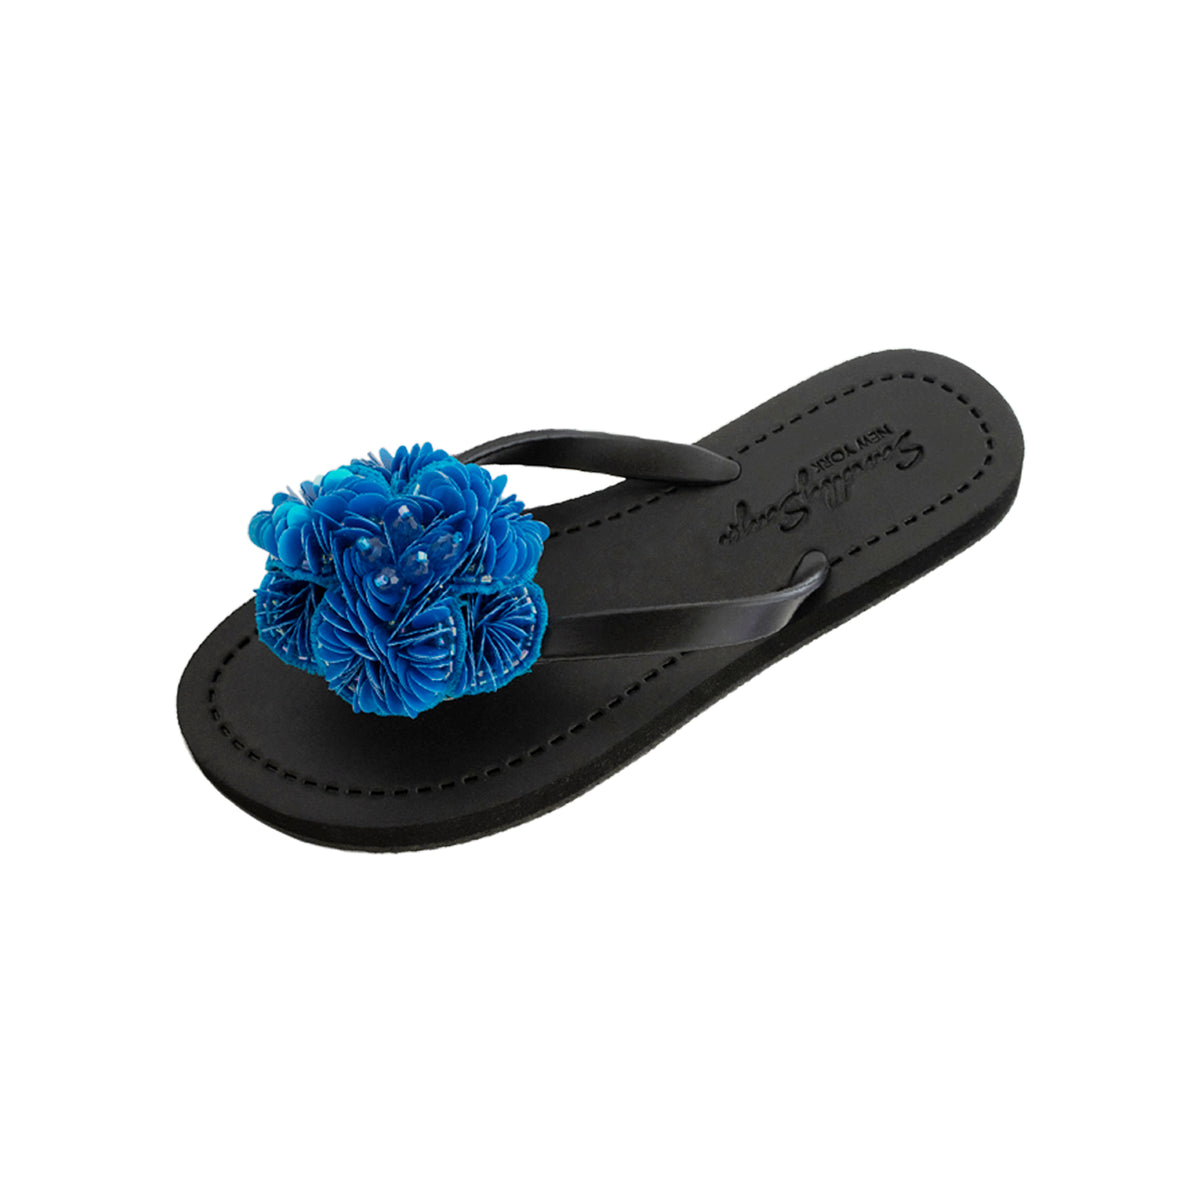 【JP】Noho (Blue) - Women's Flat Sandal -Japan Stock